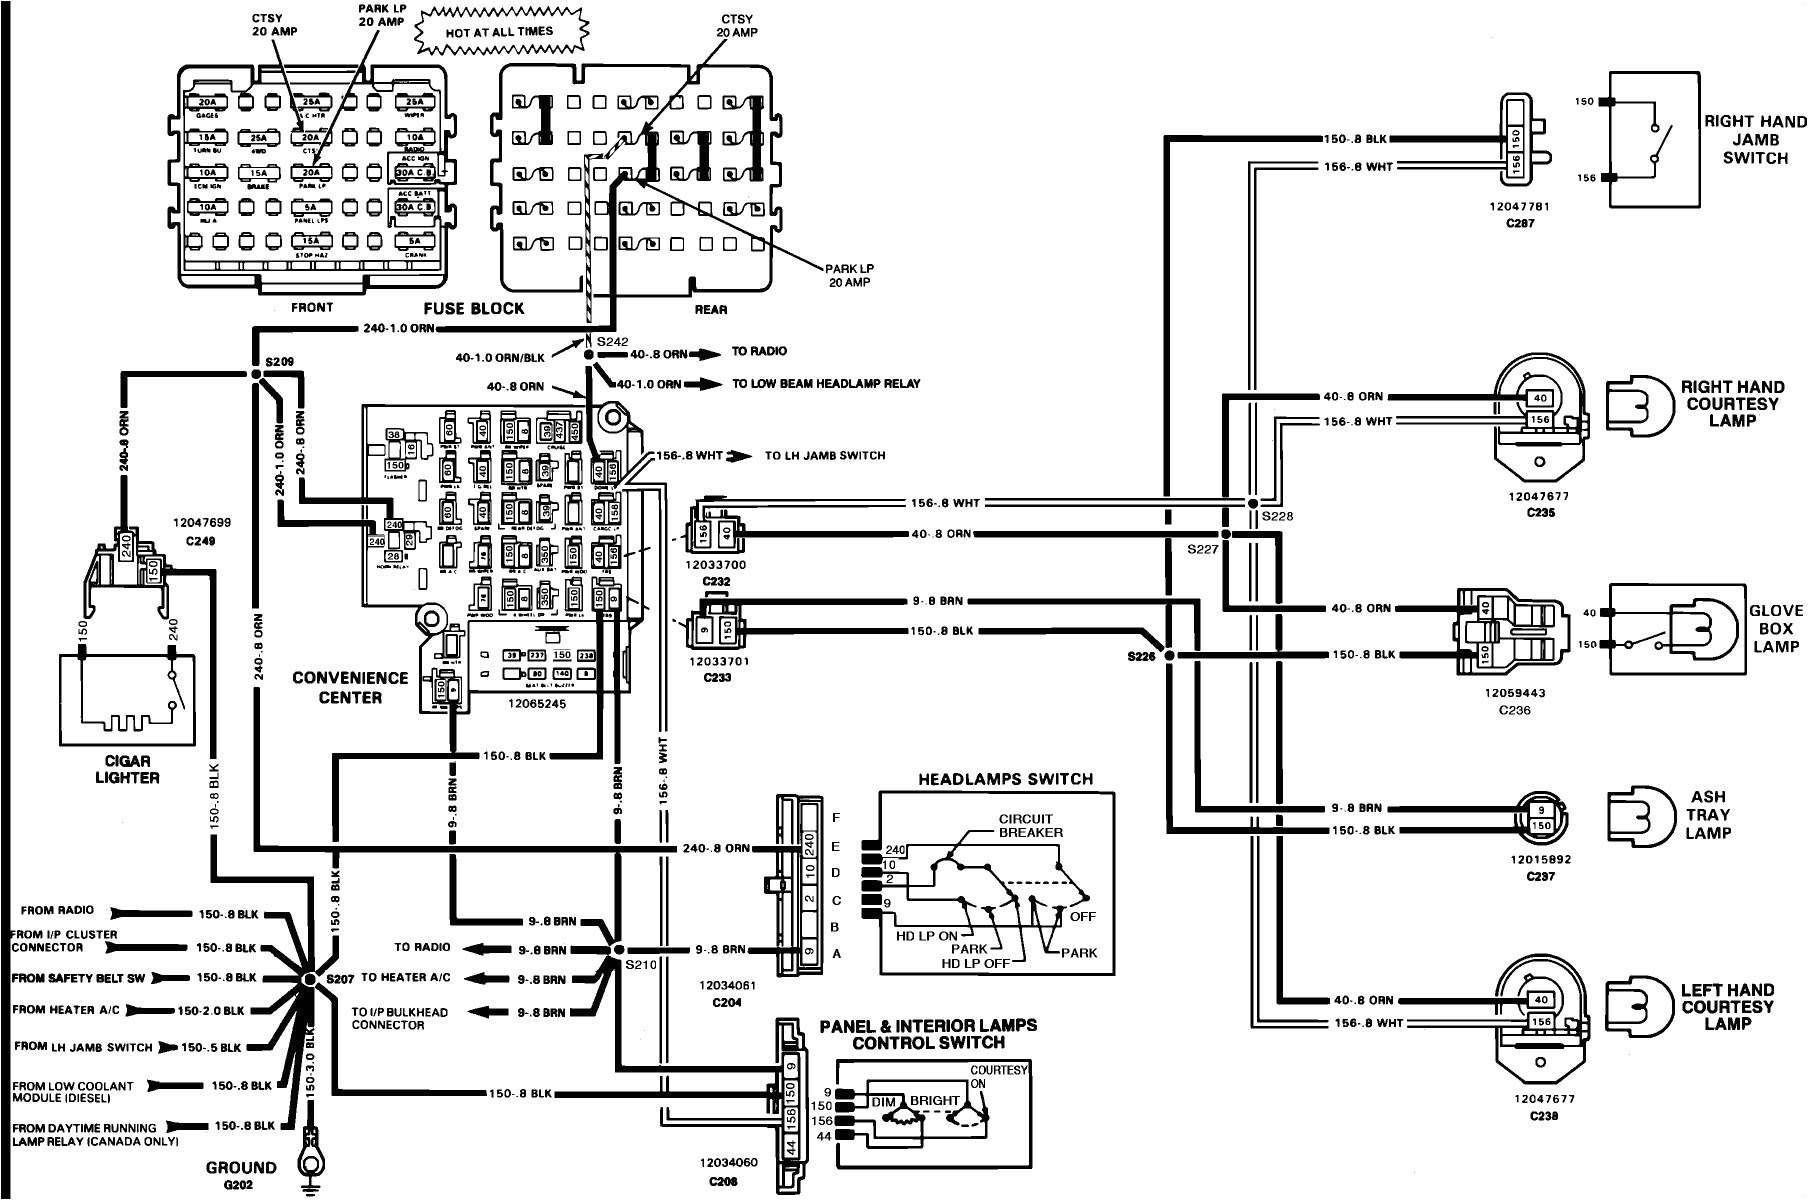 wiring diagram 65c 10 truck wiring diagram blog truck wiring harness moreover m for hho generator circuit diagram